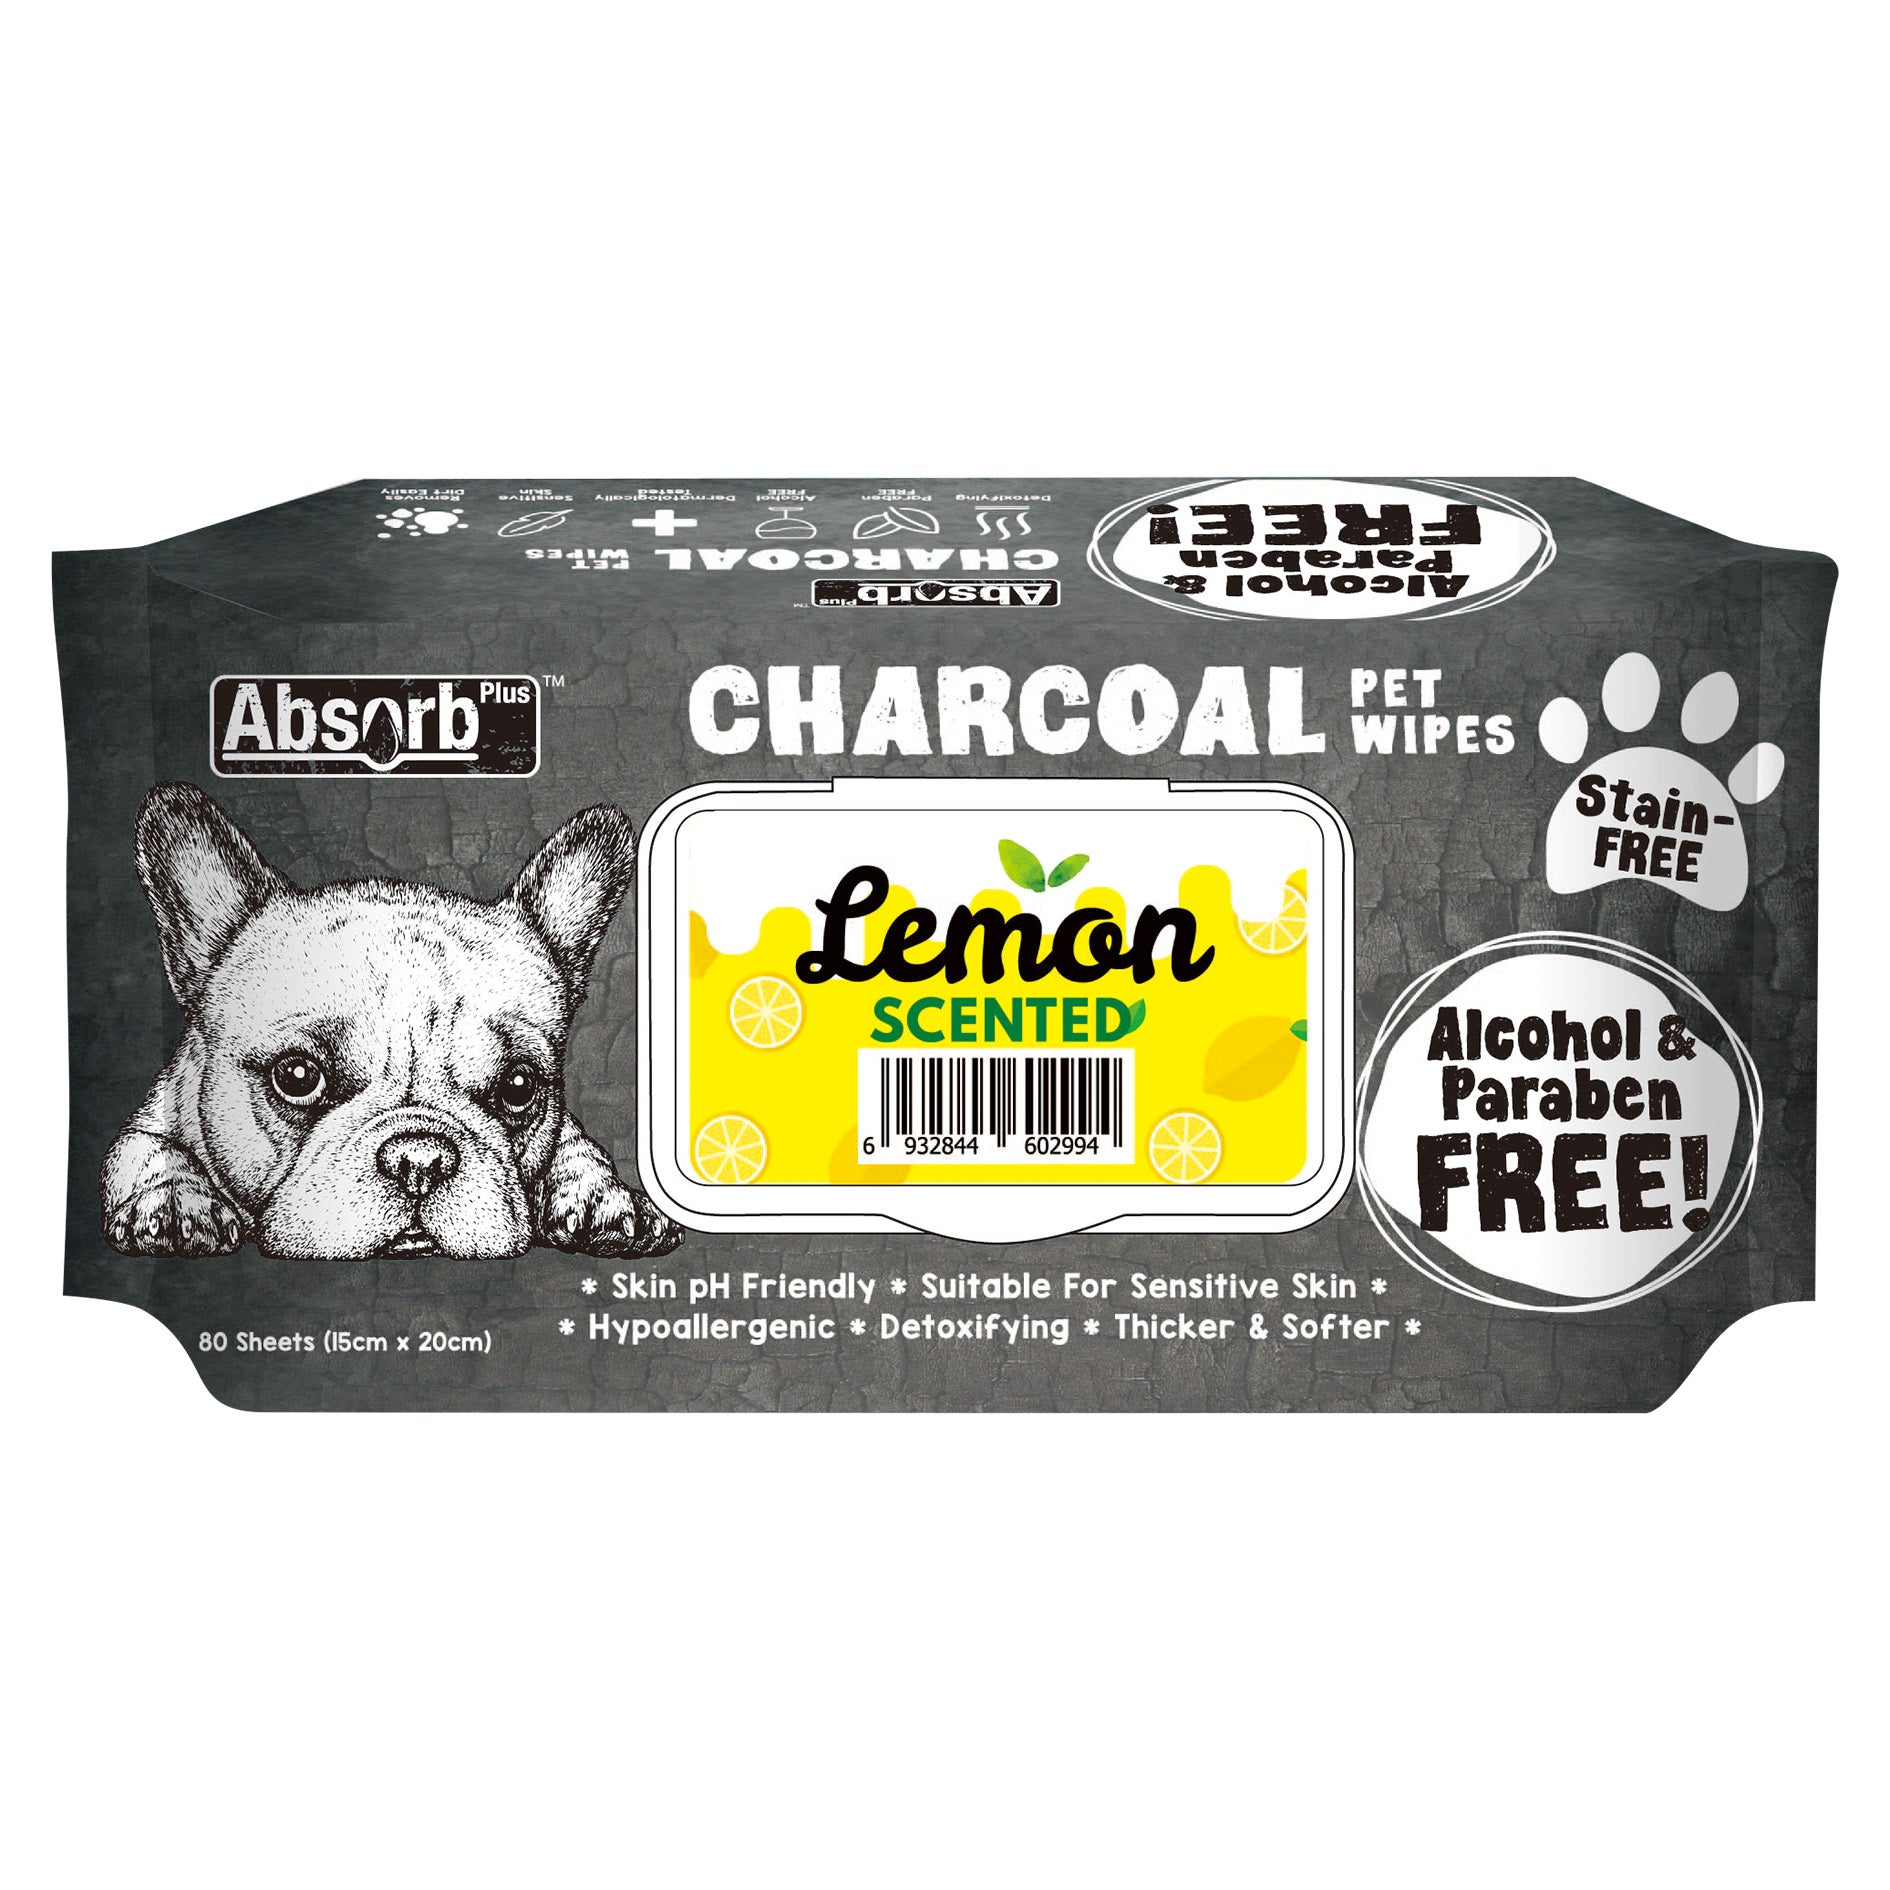 Absorb Plus Charcoal Wet Wipes - Lemon (6968590663841)